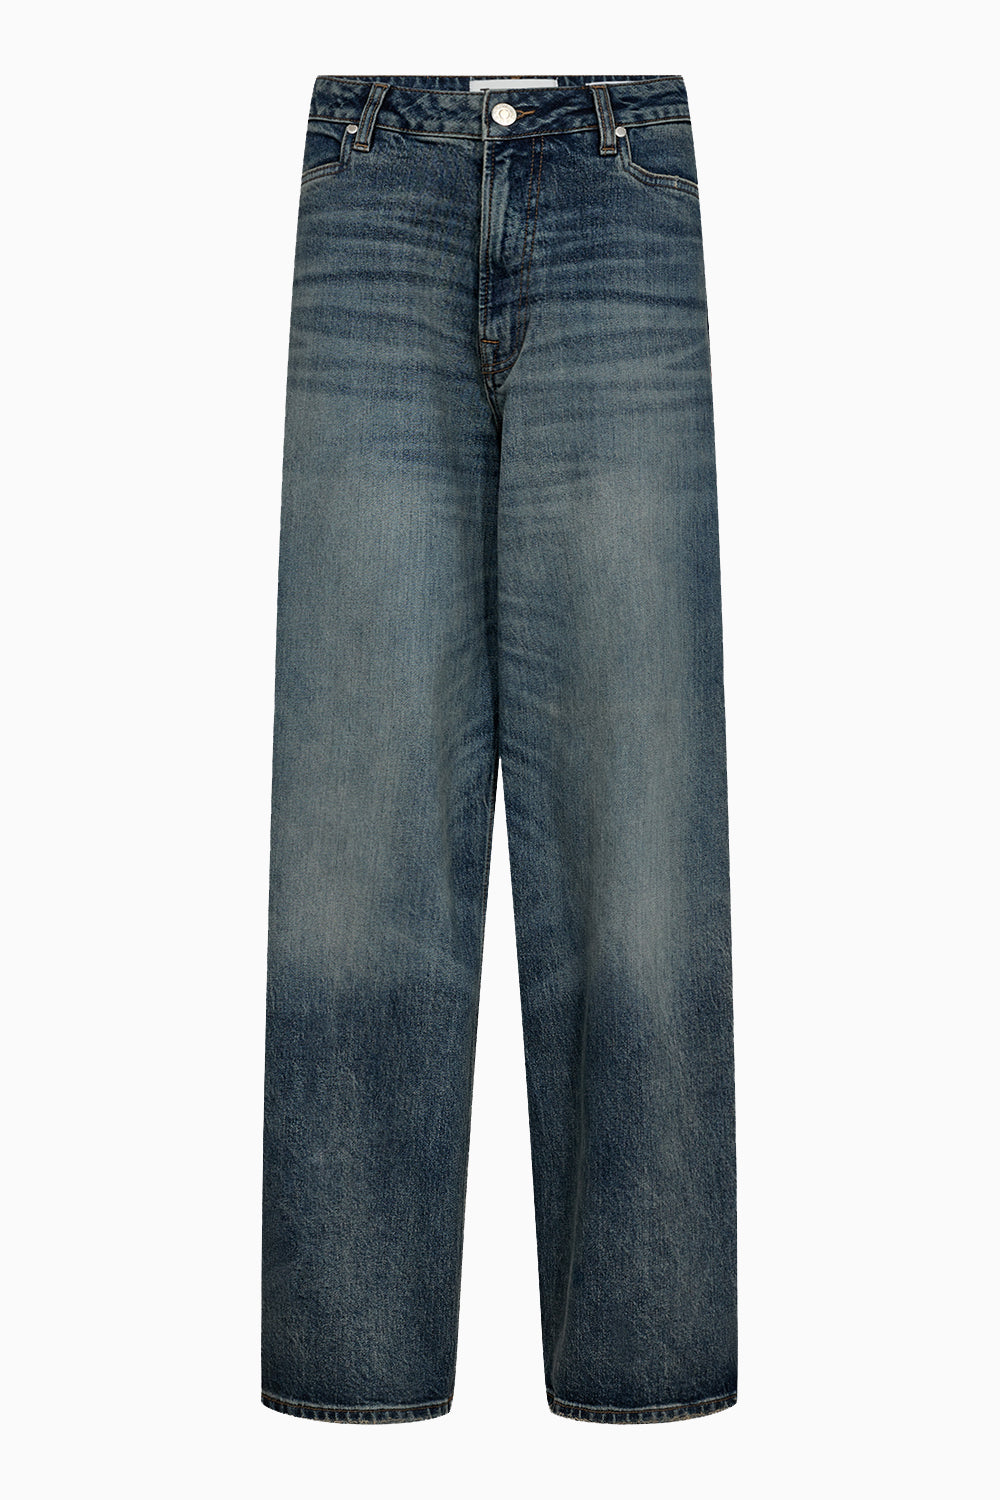 Tomorrow TMRW Kaia Slung Jeans - New Jersey Jeans & Pants 51 Denim Blue